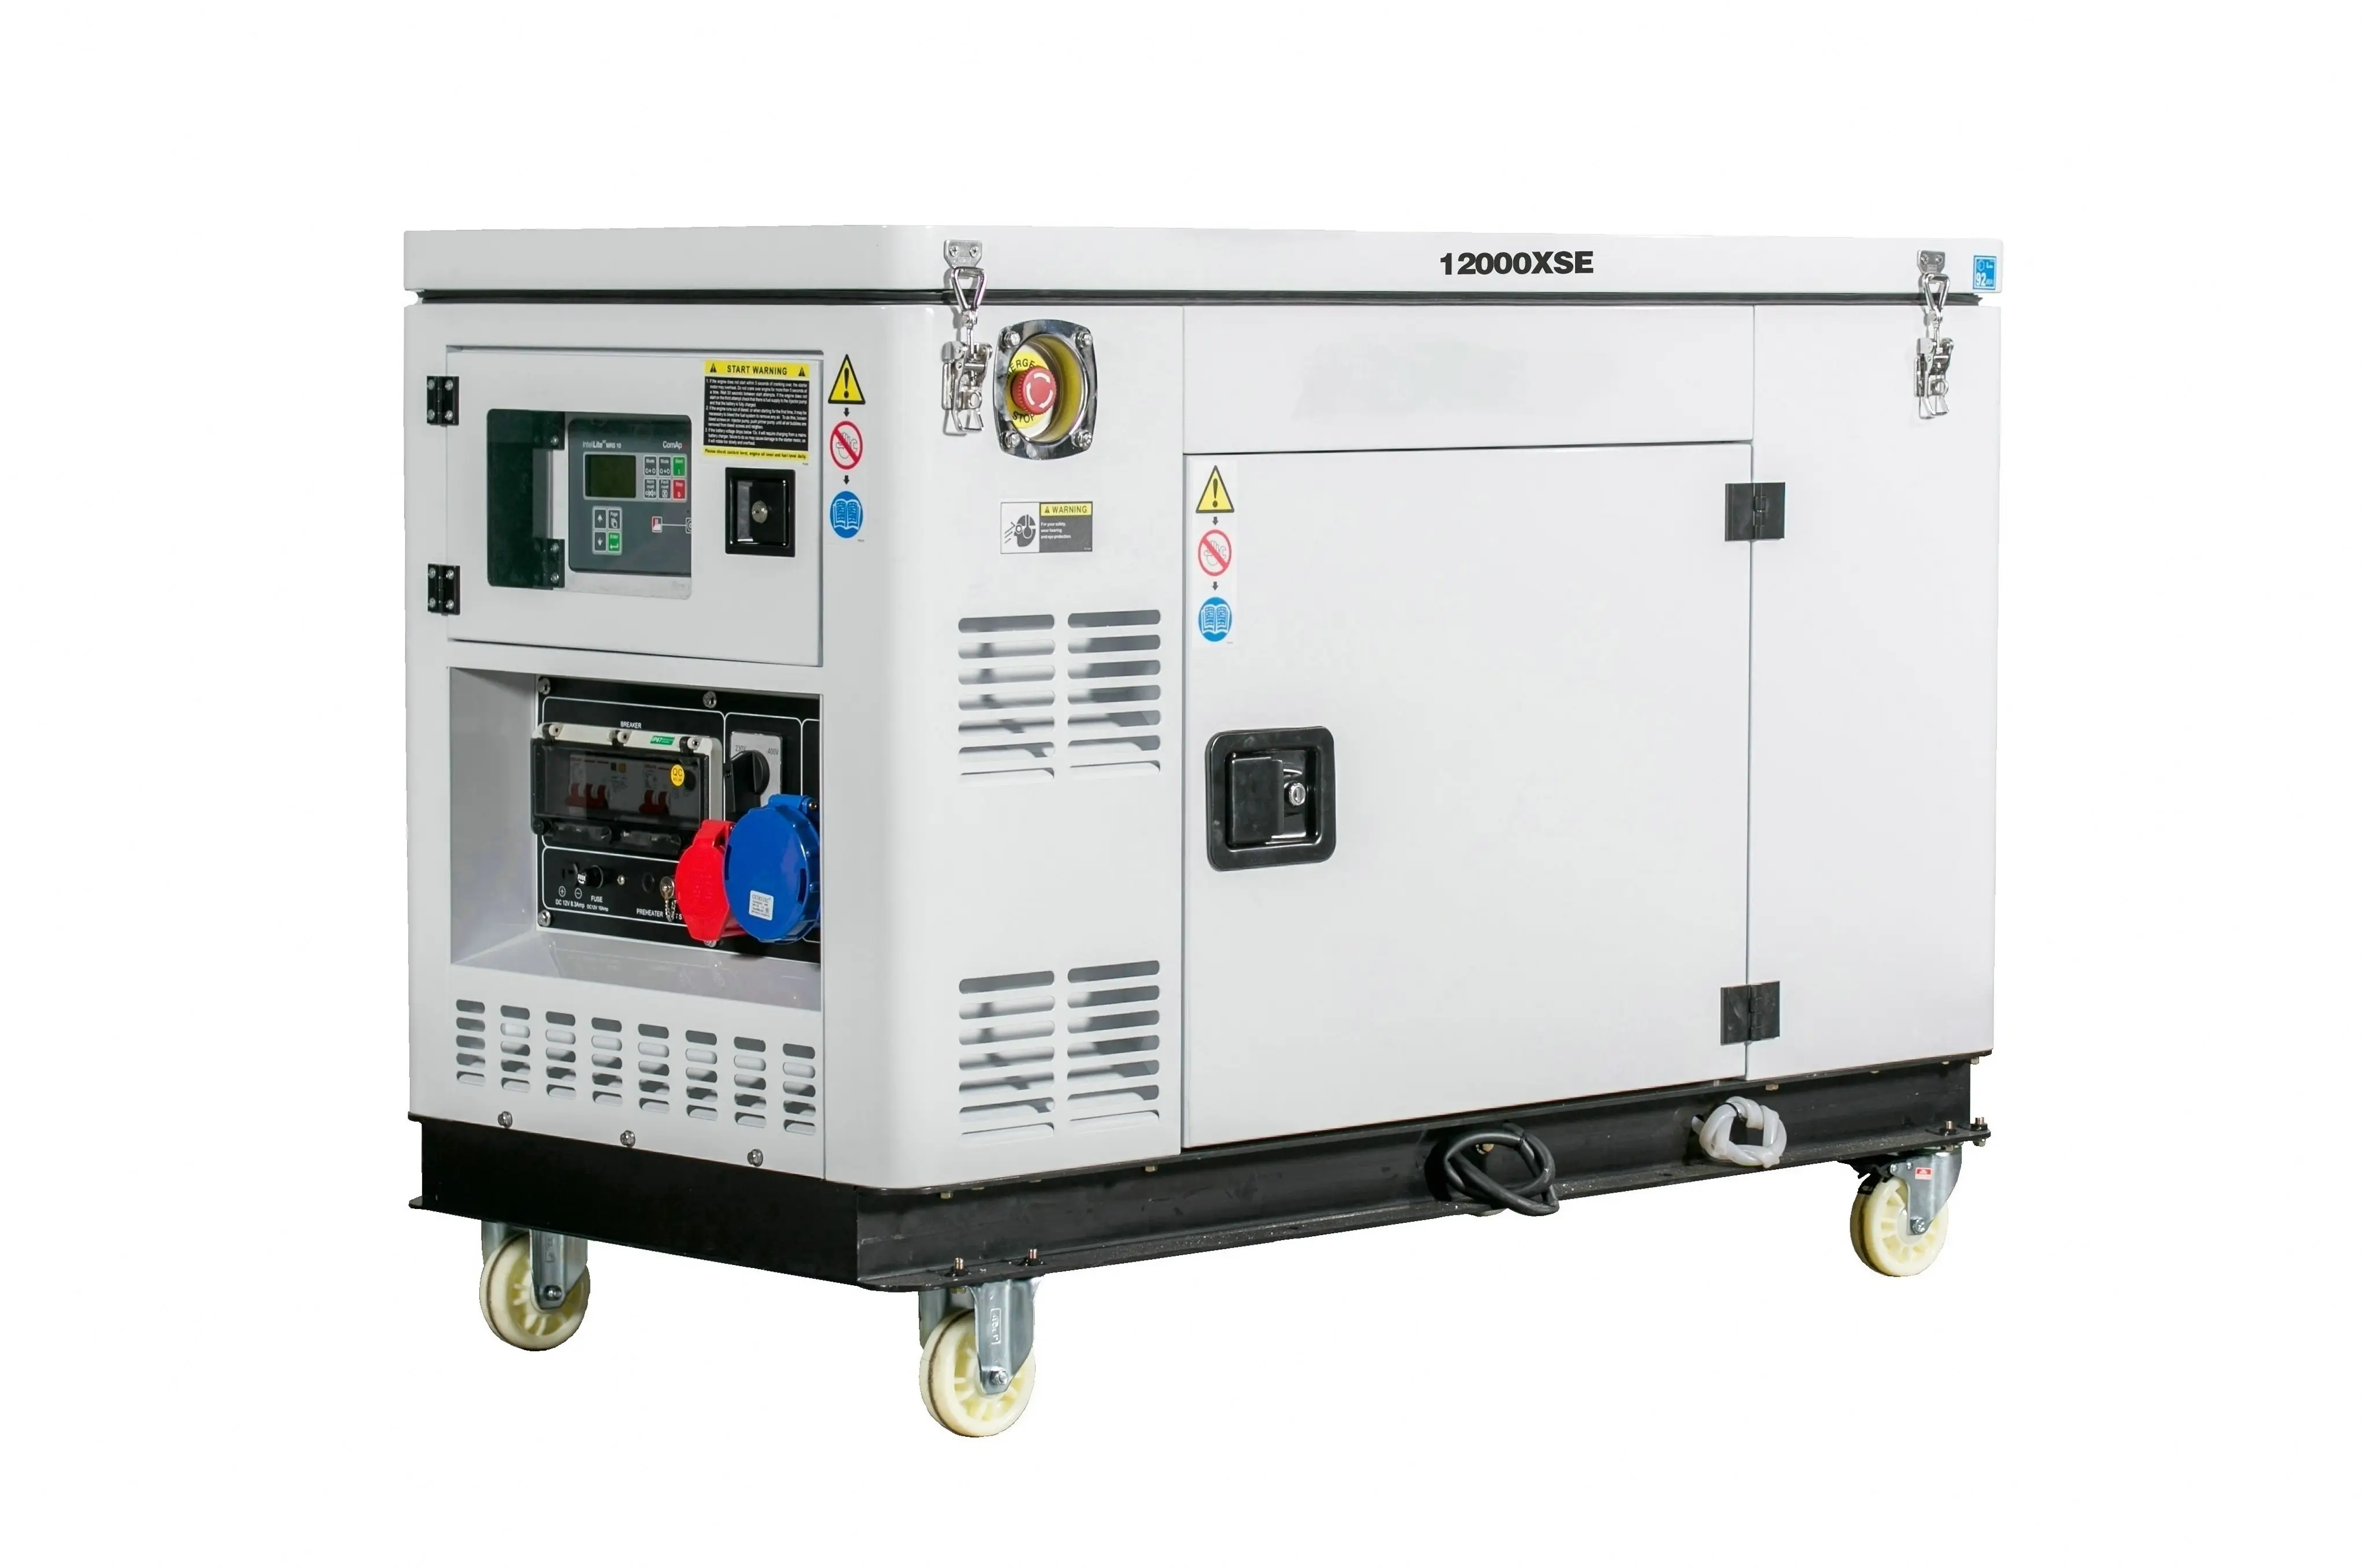 wholesaler 3 phase air cooled CE 5kw diesel generator portable gasoline silent generator portable inverter portable generator